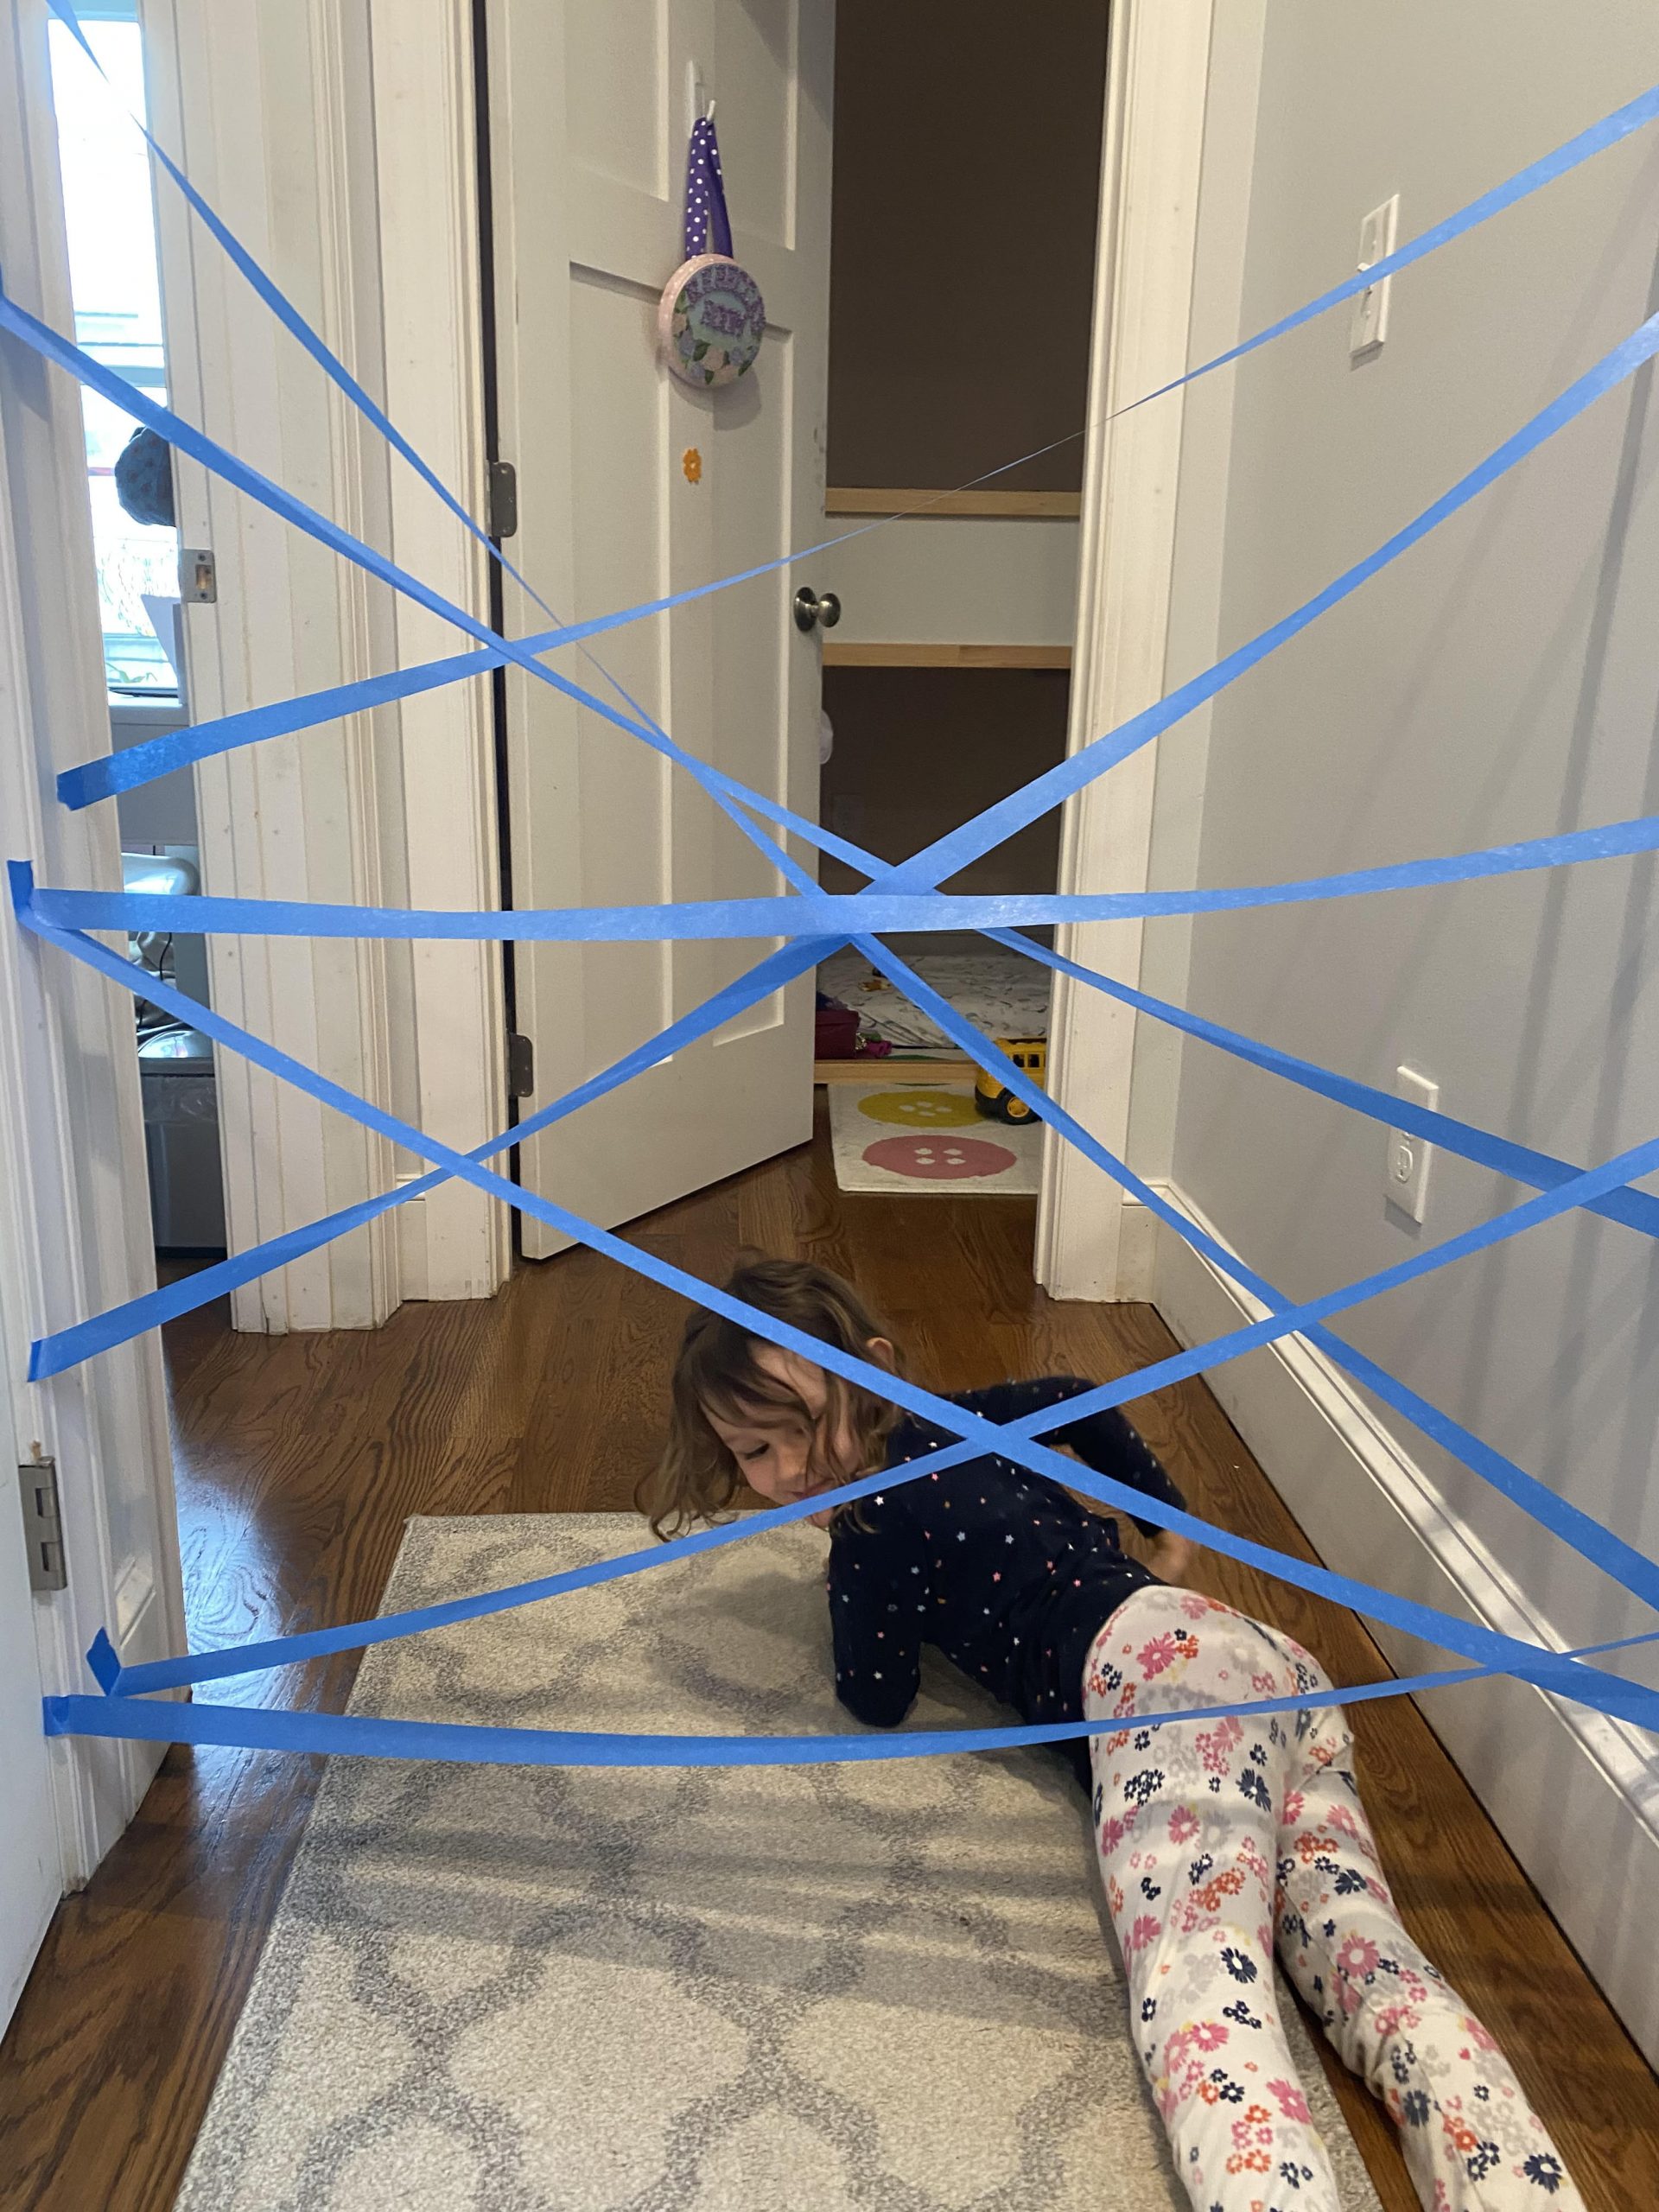 painter's Tape Toddler activities 